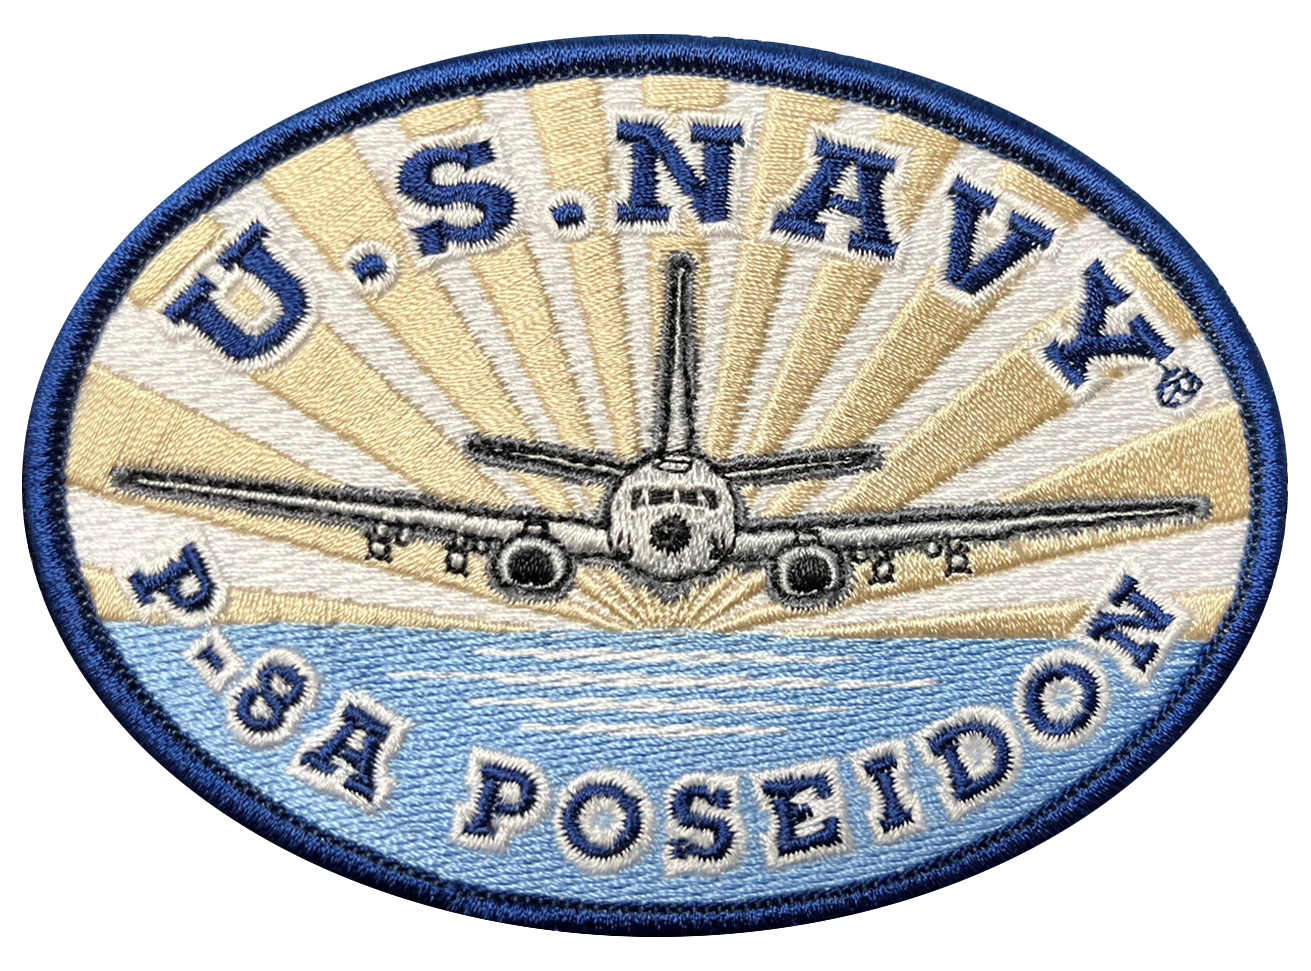 PAT-U.S. NAVY P-8A POSEIDON